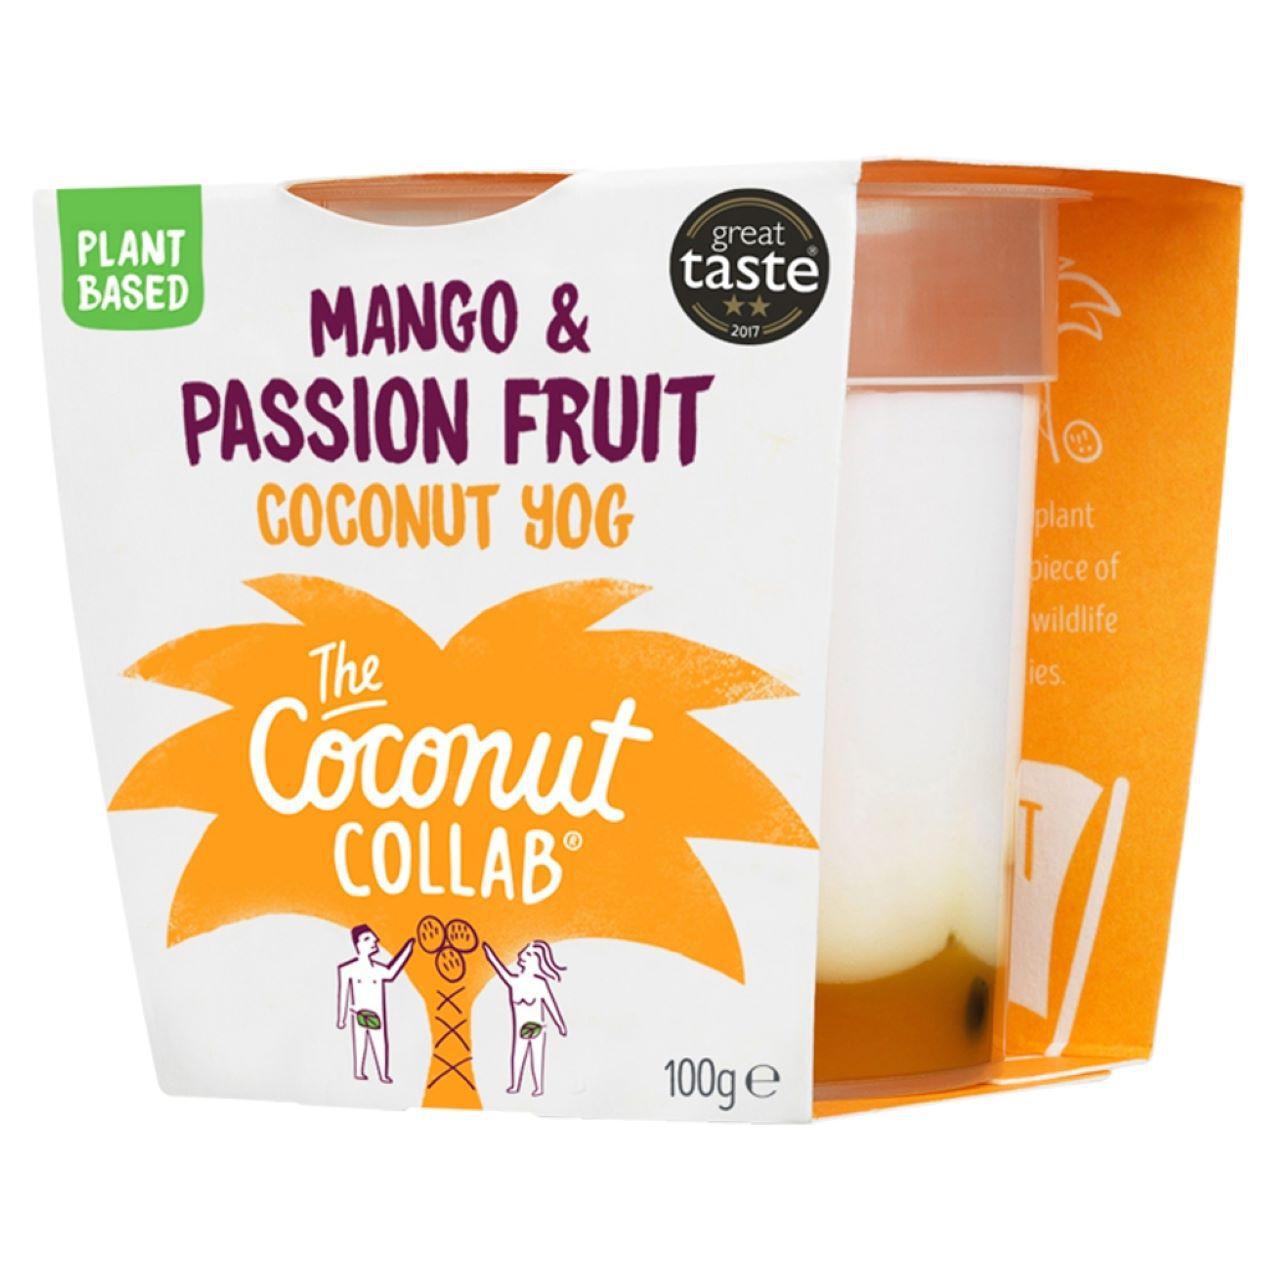 The Coconut Collaborative Mango & Passion Fruit Coconut Yog 100g